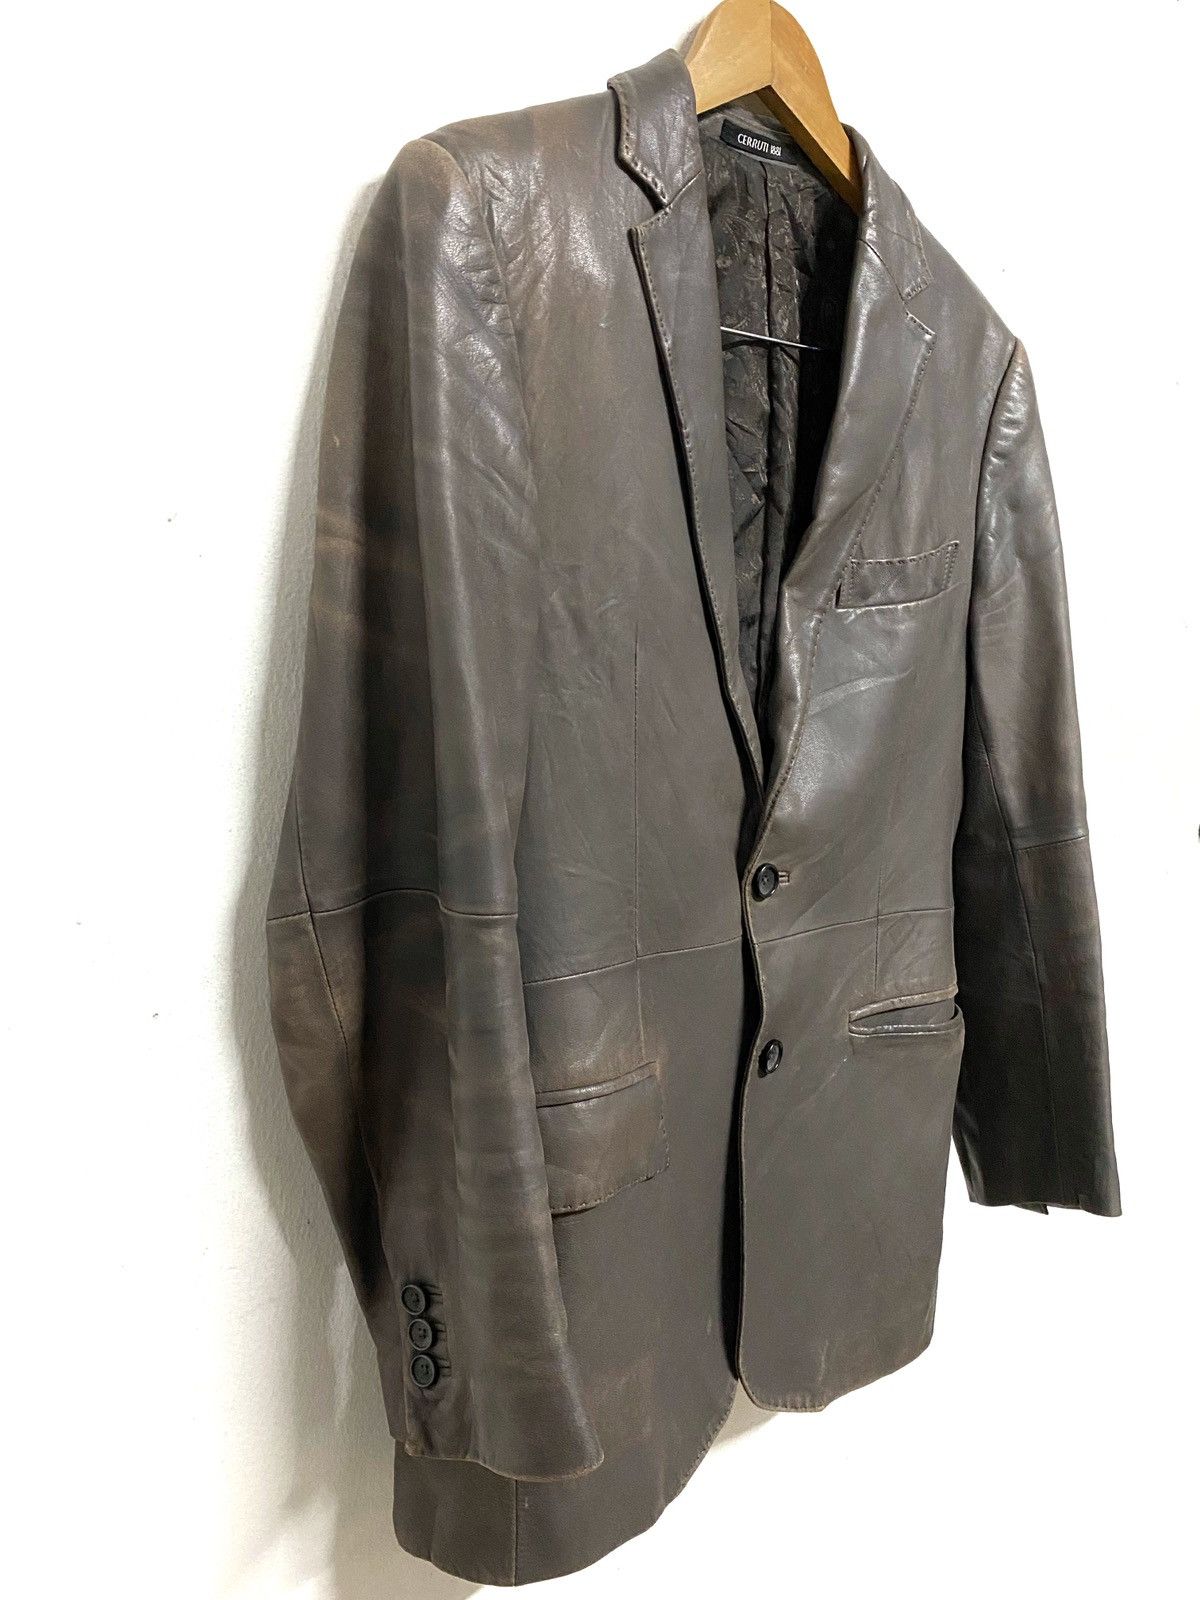 Cerruti 1881 Lambskin Leather Jacket - 4